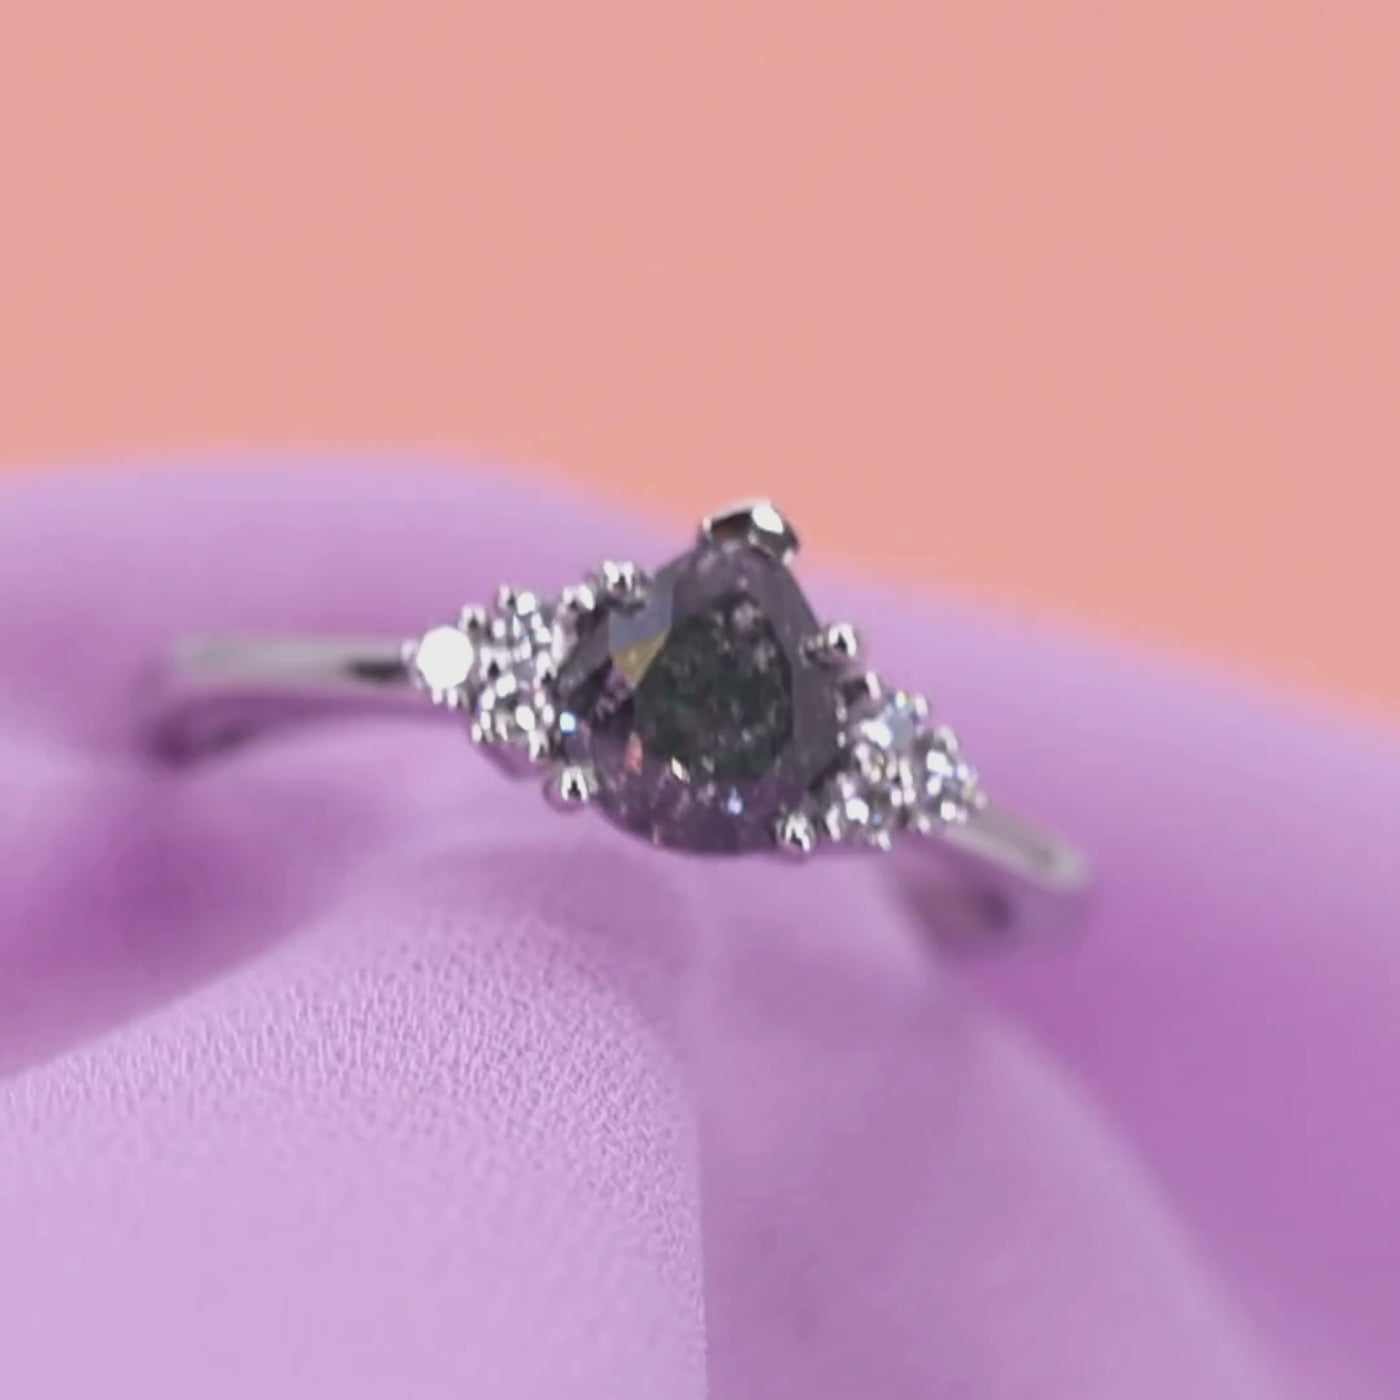 Henrietta - Pear Cut Teardrop Shape Salt and Pepper Diamond Engagement Ring - Custom Made-To-Order Design